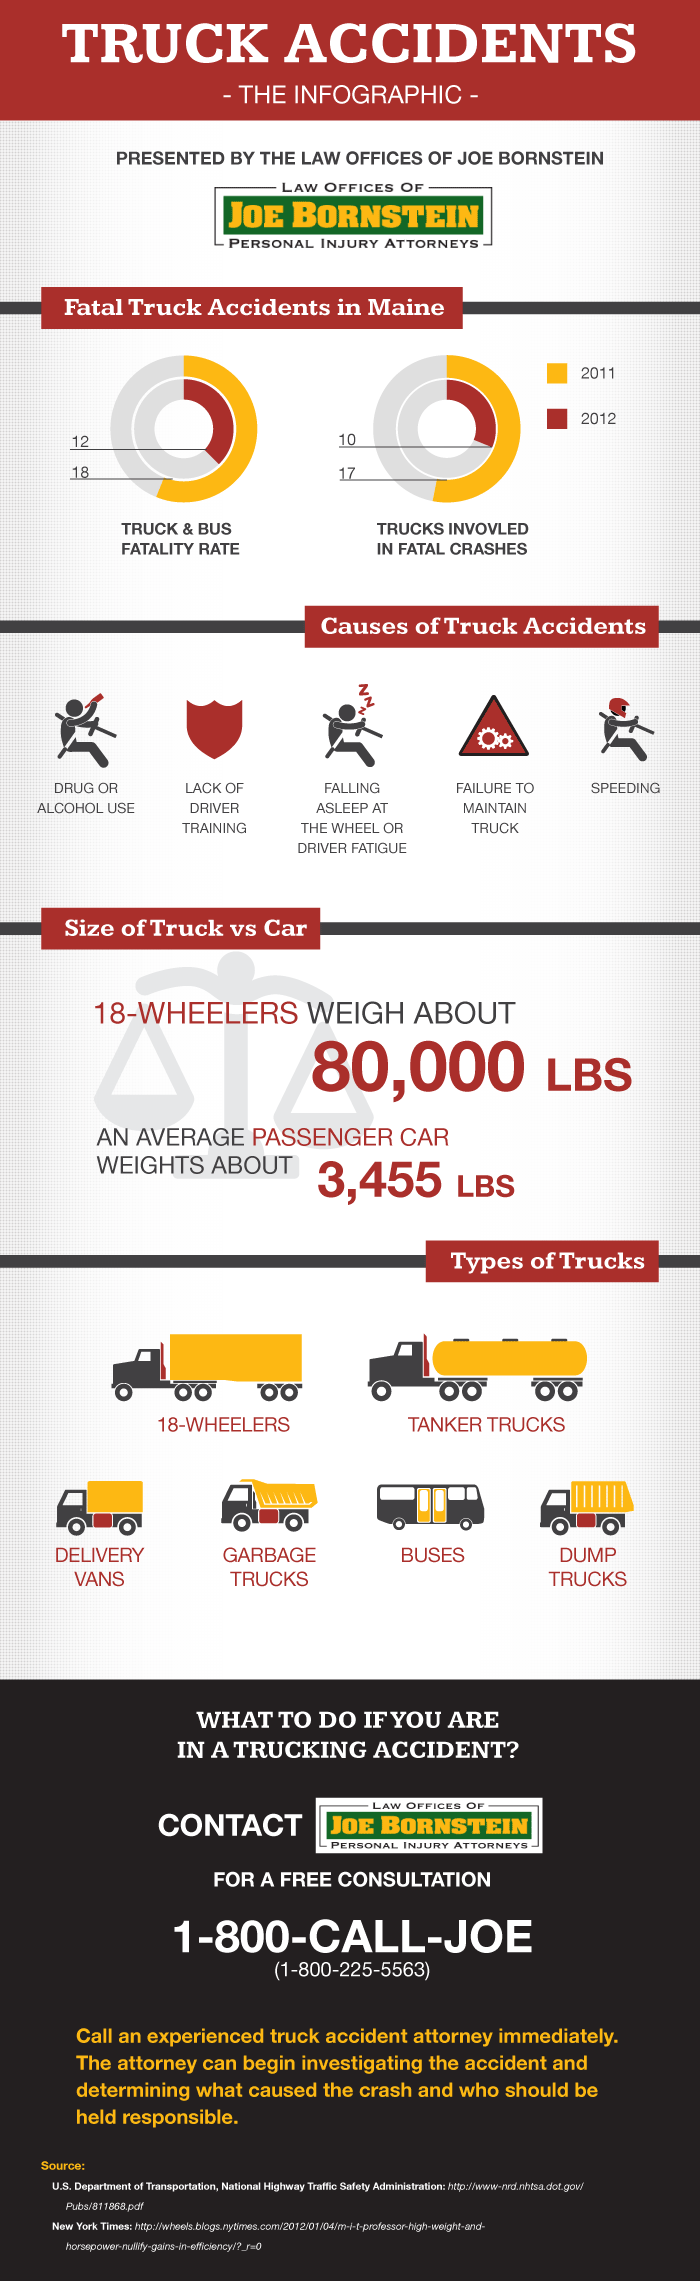 Bornstein Truck Accidents infographic